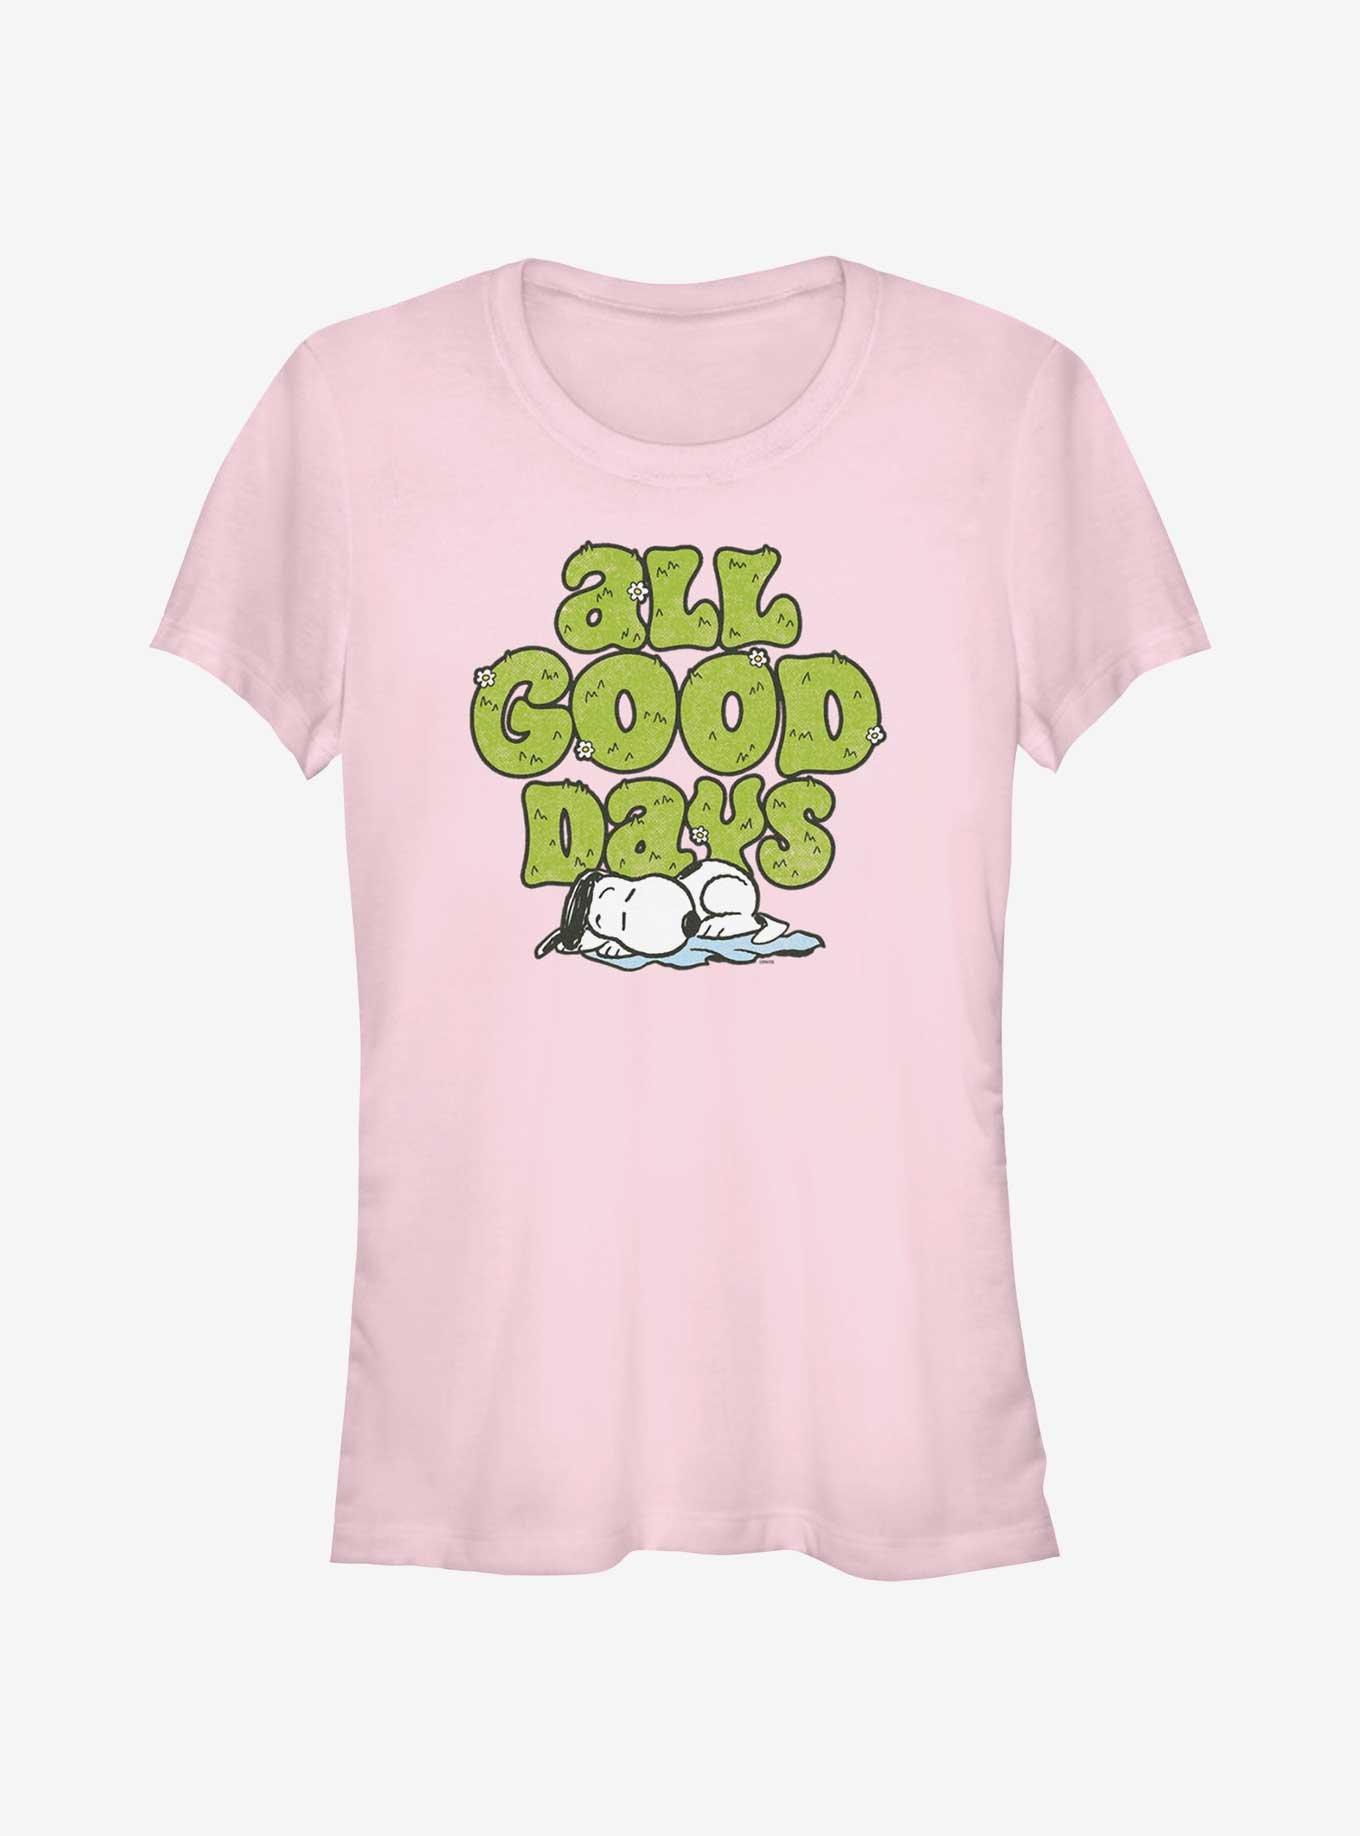 Peanuts Snoopy All Good Days Girls T-Shirt